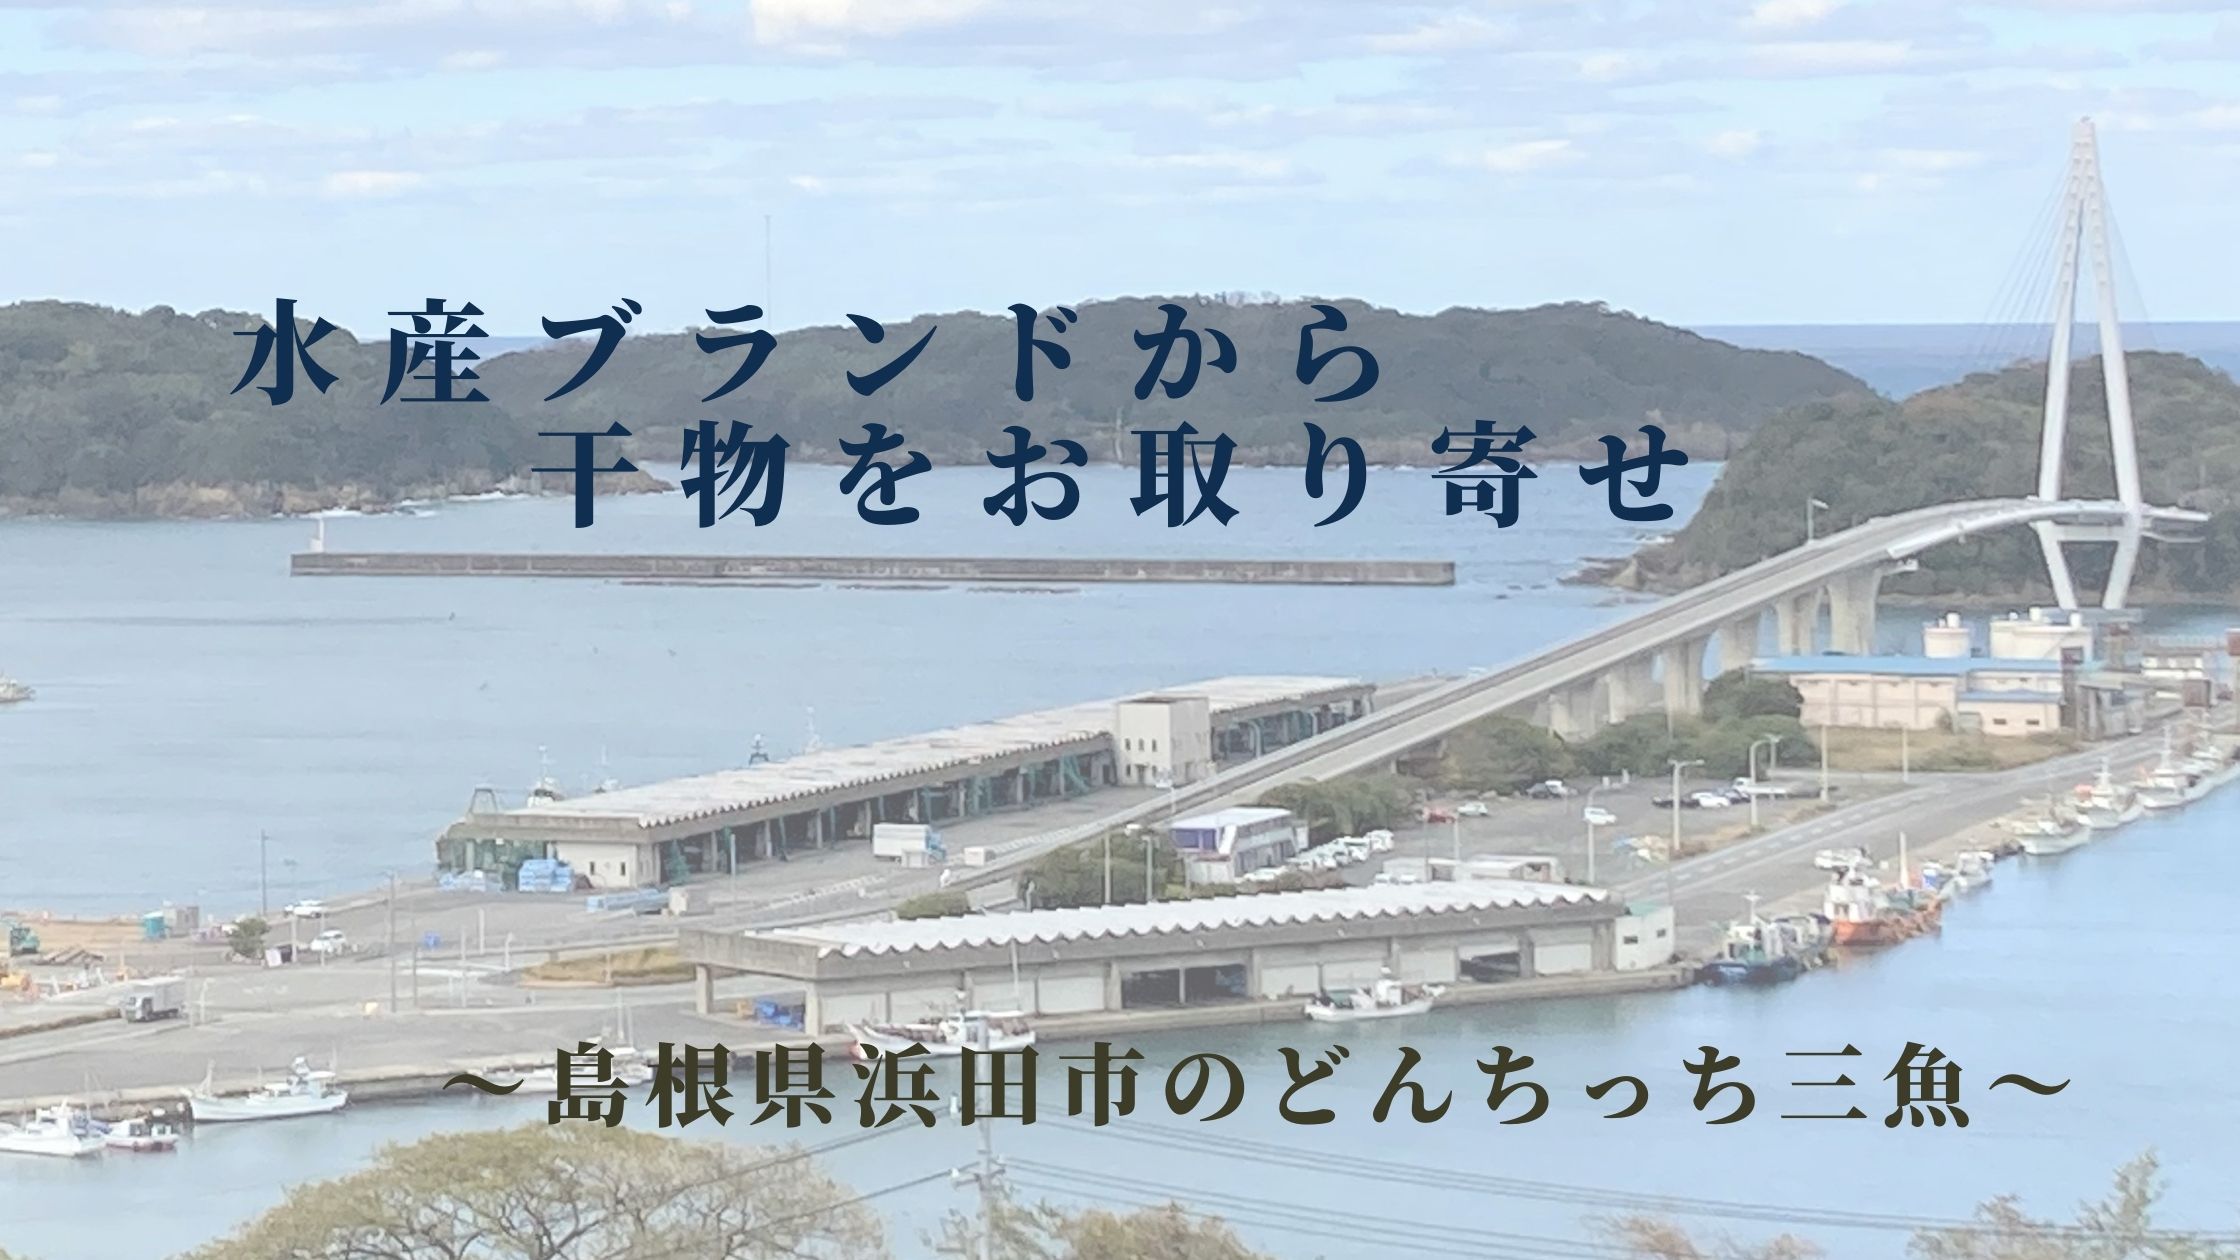 NHKうまみ凝縮!干物日本一! “どんちっちカレイ”〜島根・浜田市〜が放送されました